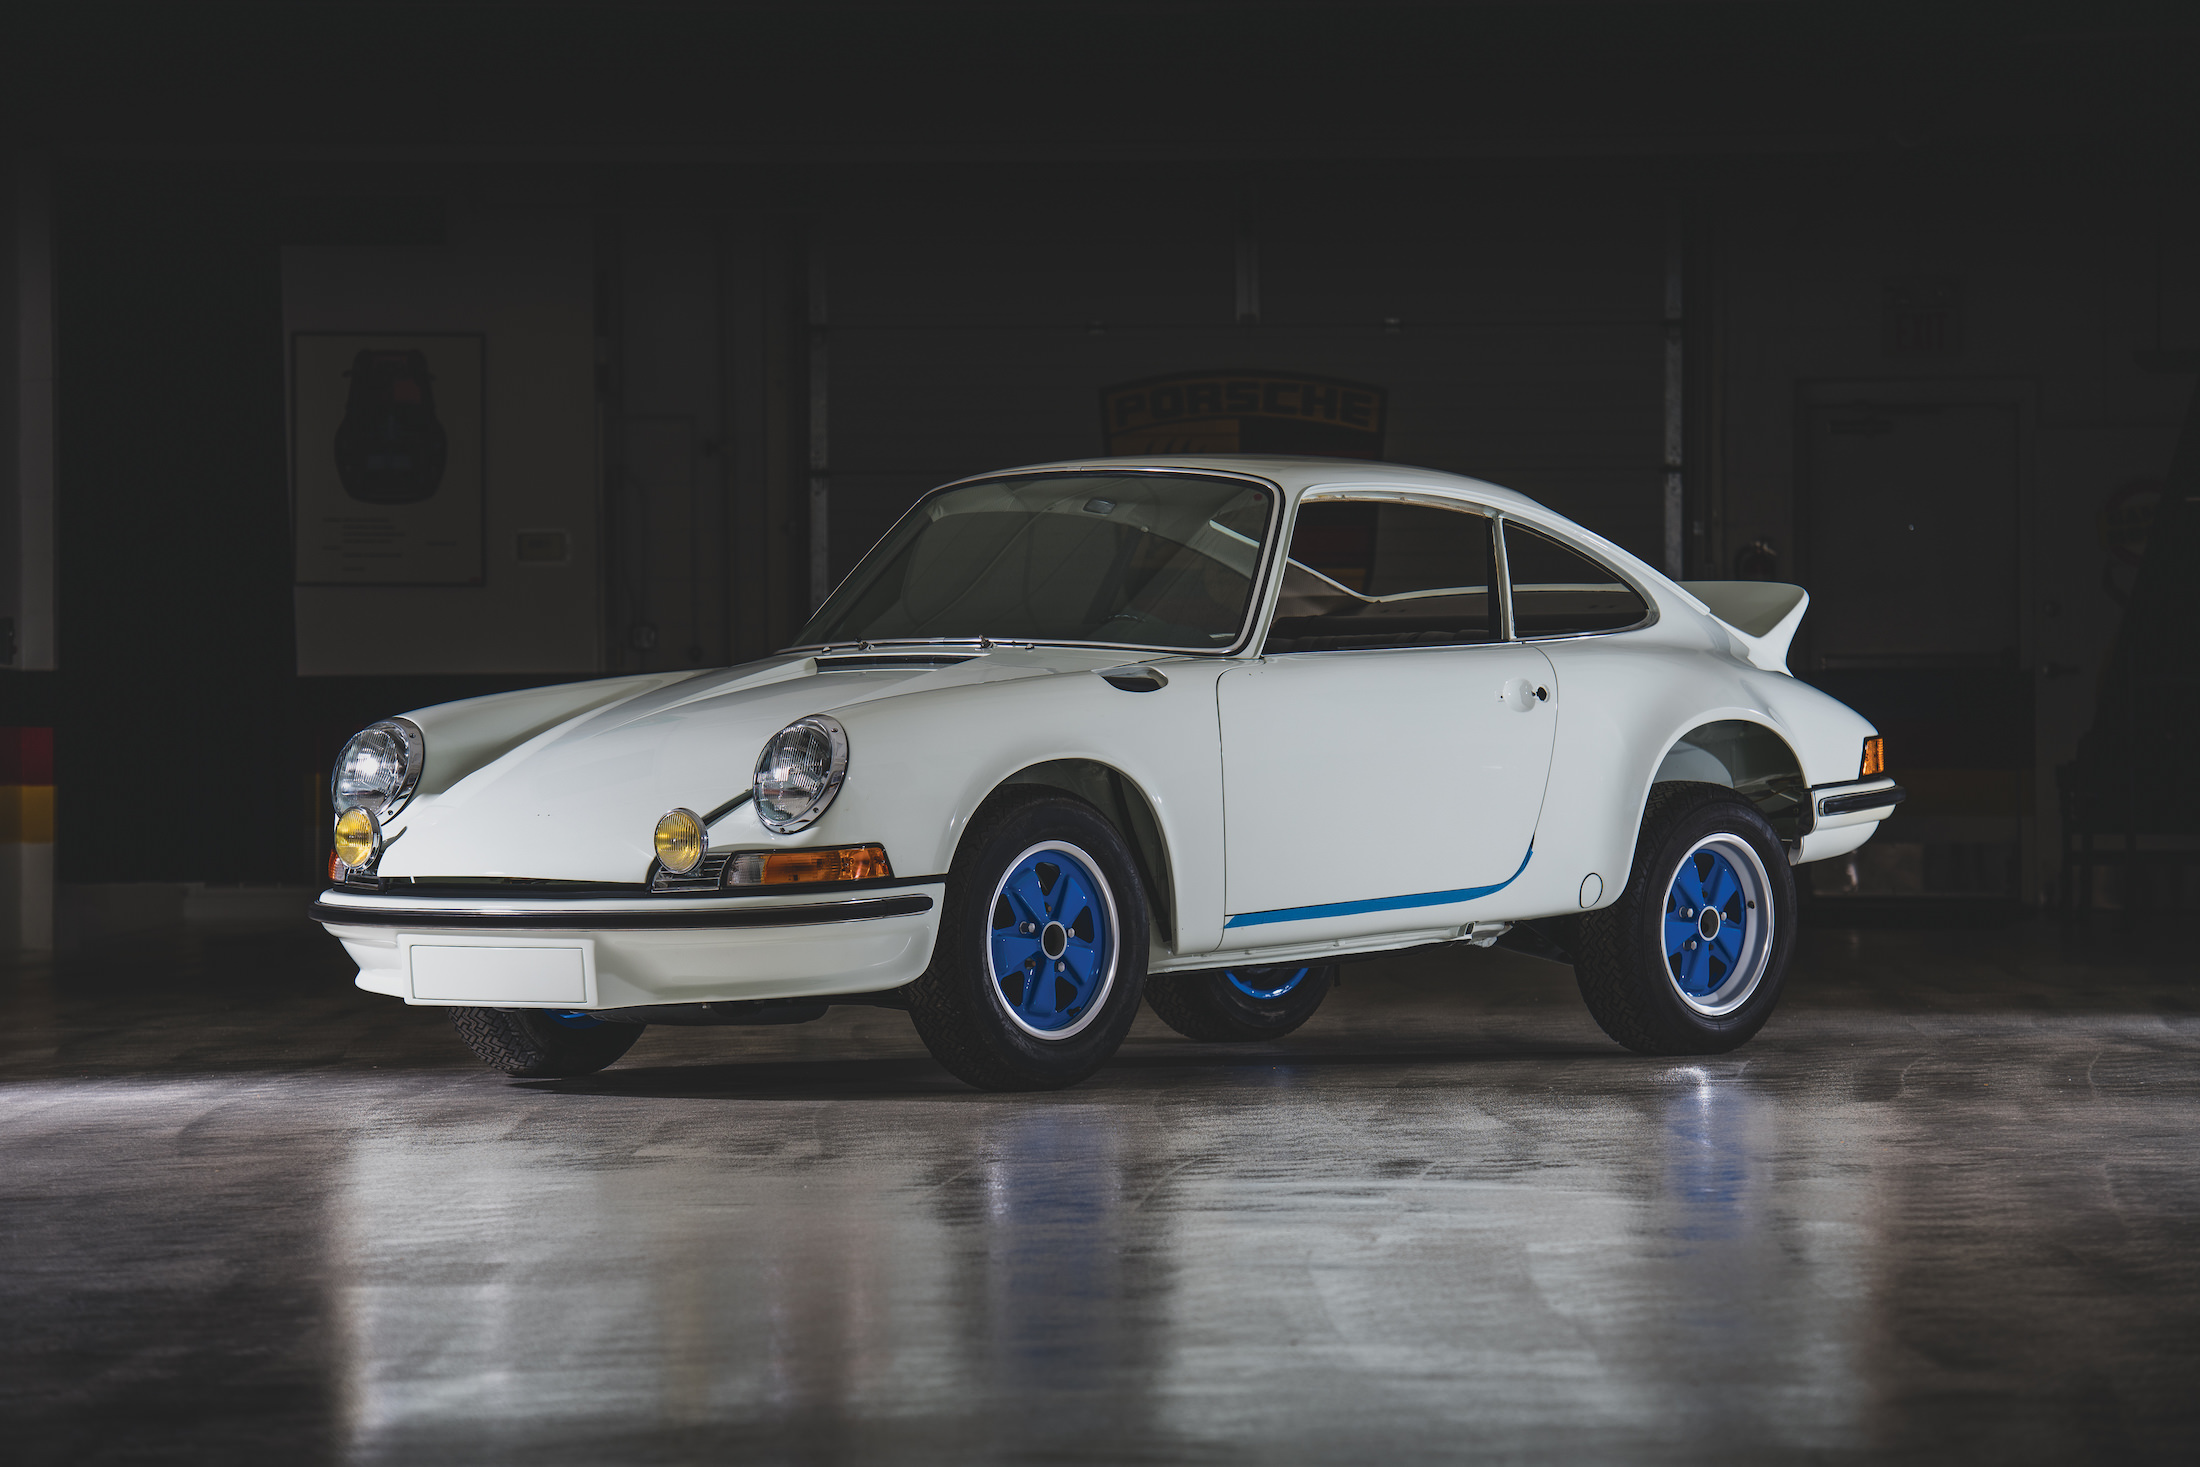 Half Million Dollar Project Car: An Original 1973 Porsche 911 Carrera